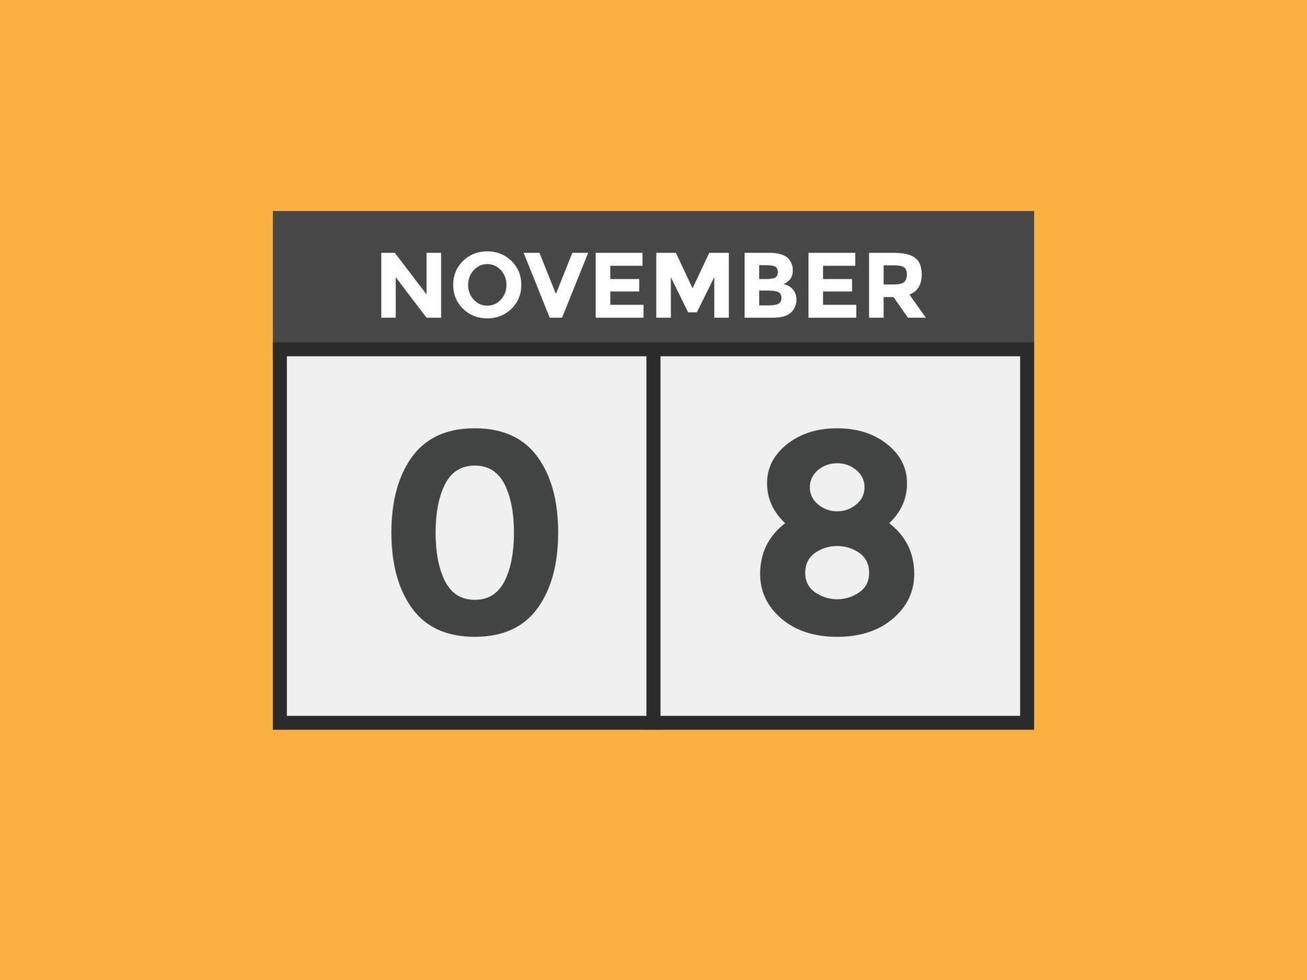 november 8 calendar reminder. 8th november daily calendar icon template. Calendar 8th november icon Design template. Vector illustration